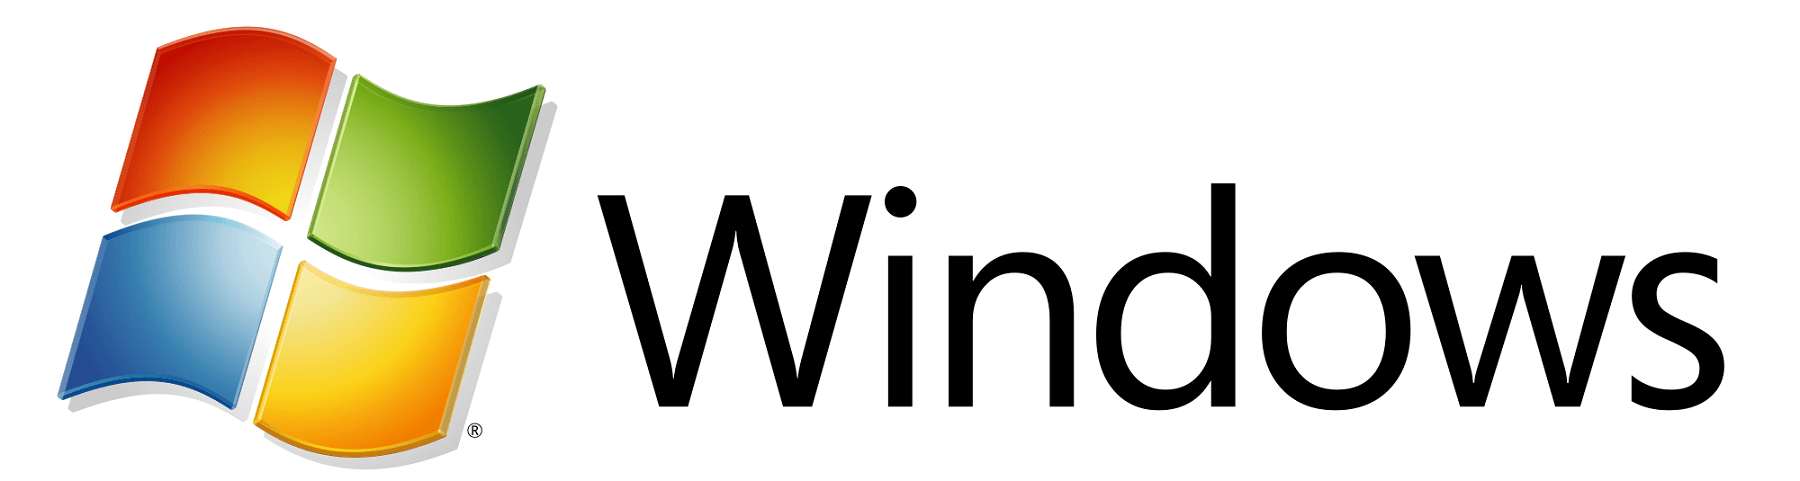 New Microsoft Windows Logo - Microsoft Windows Logo PNG Transparent Microsoft Windows Logo.PNG ...